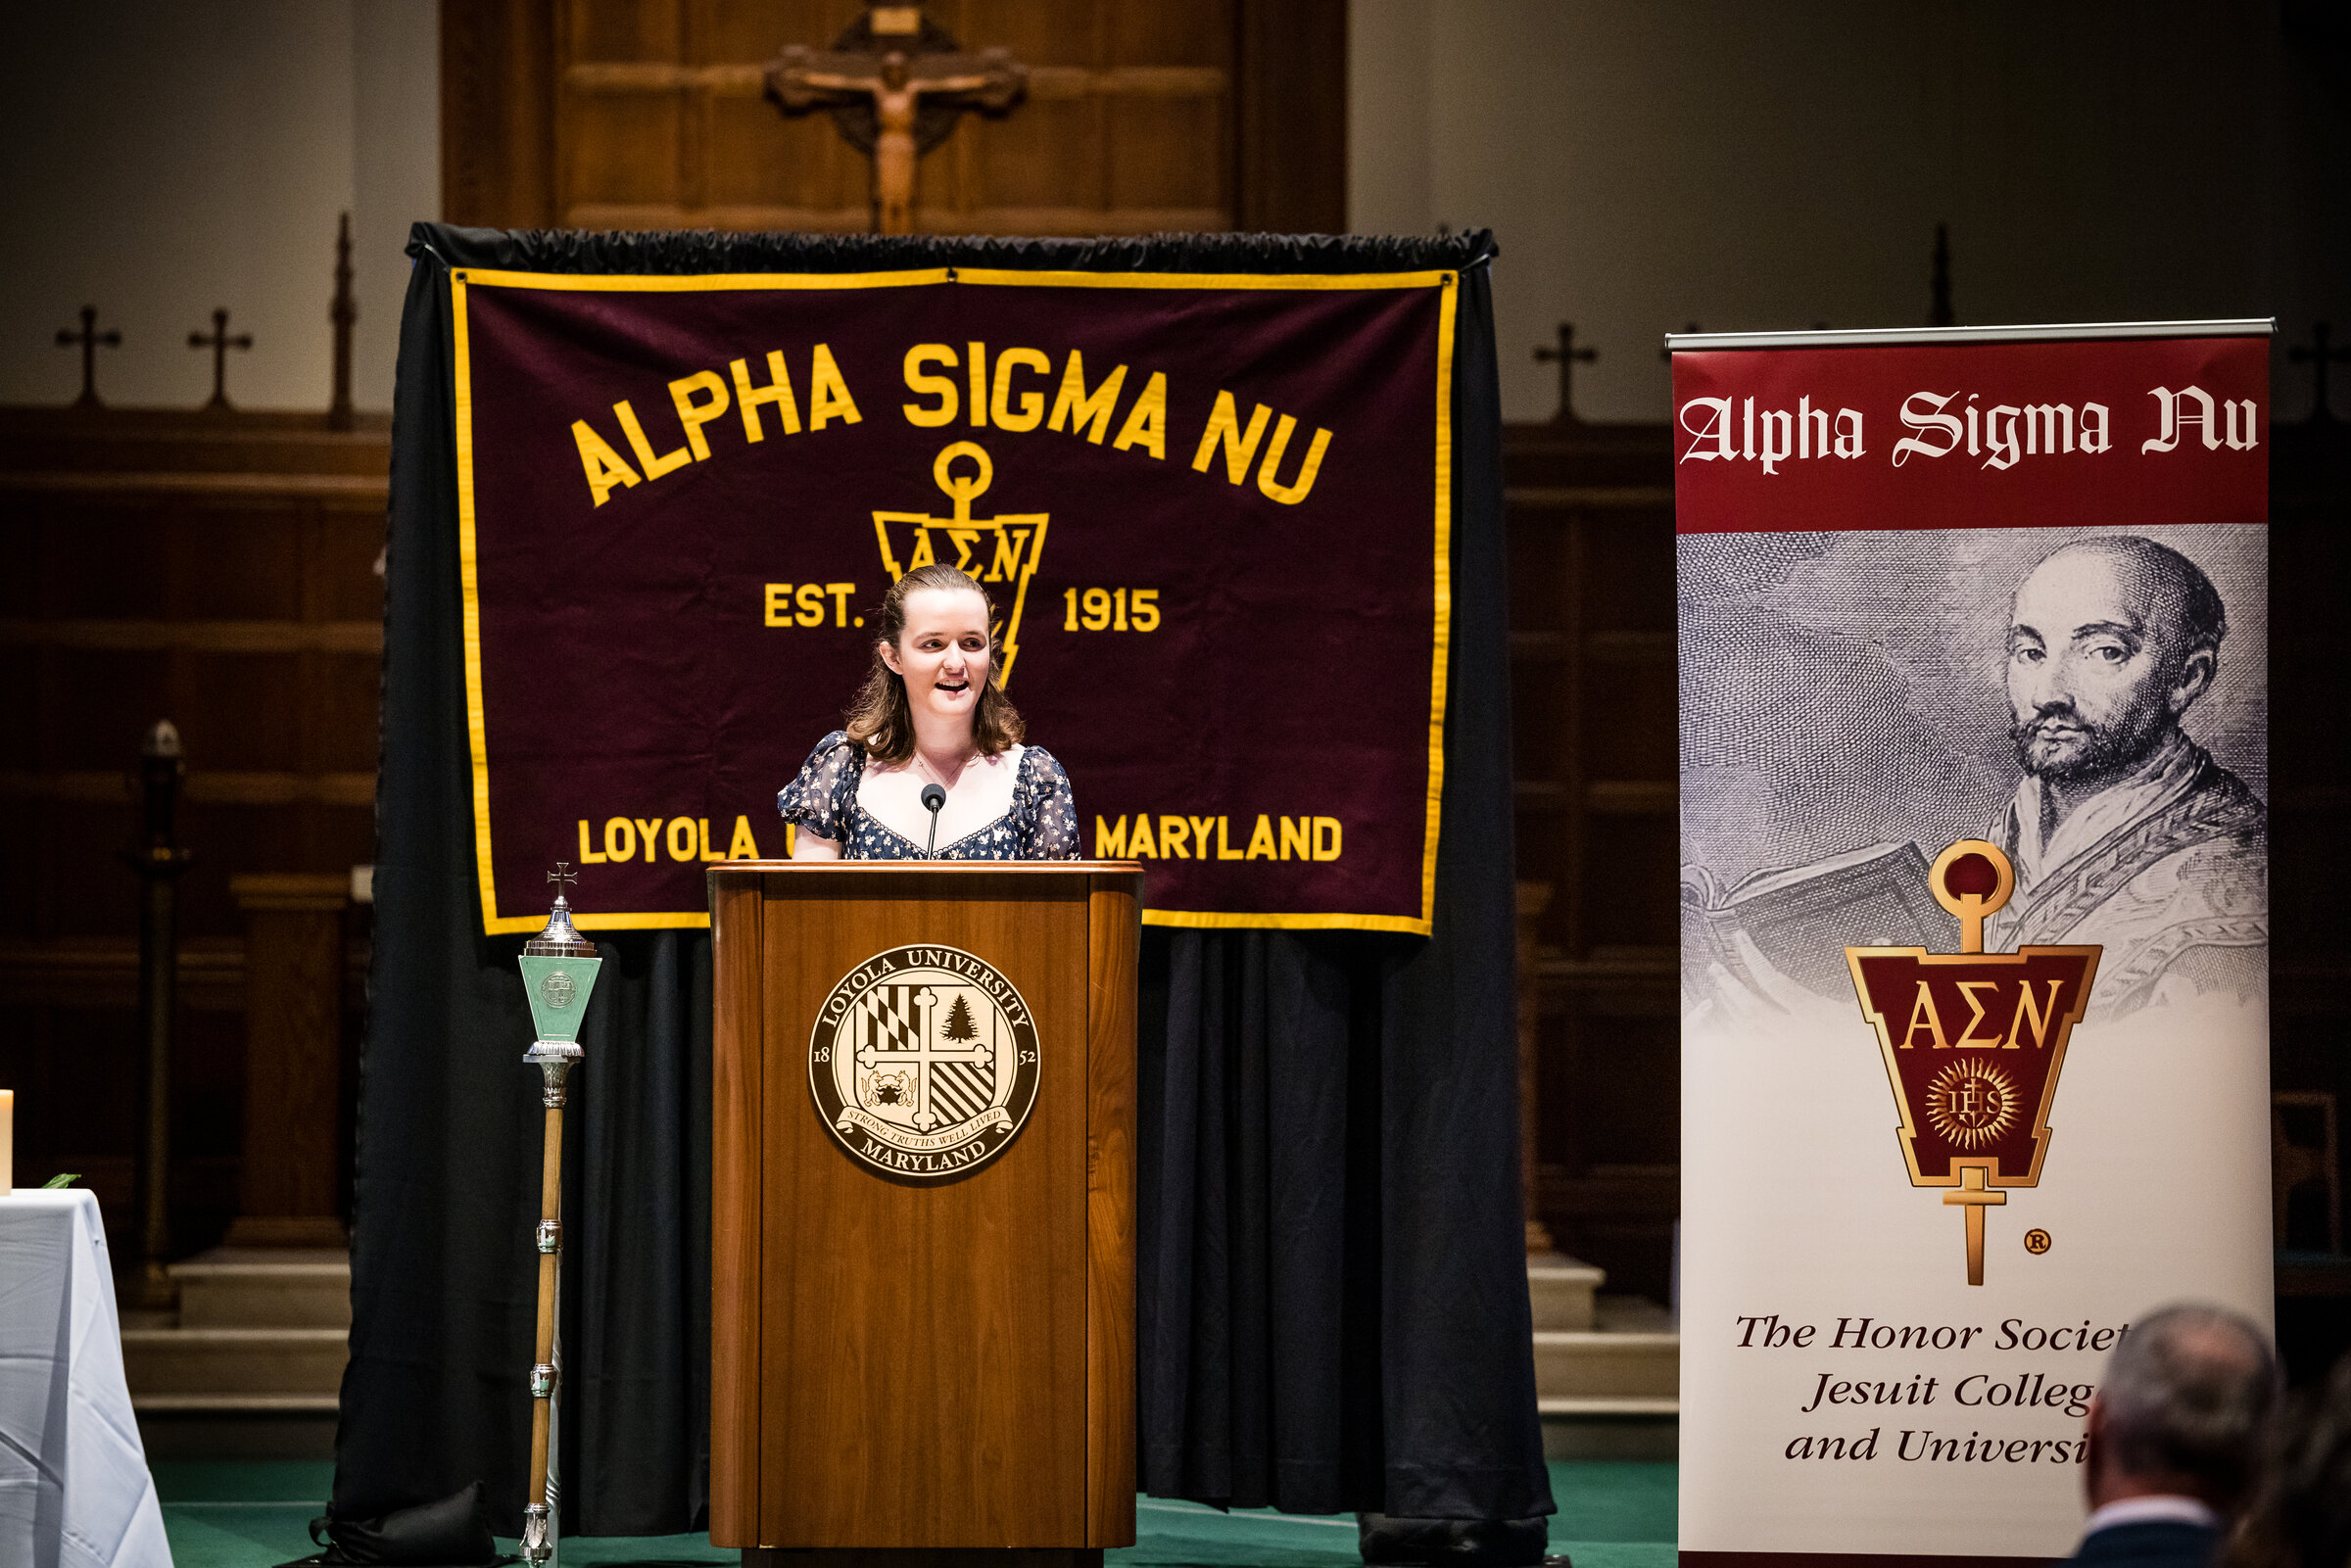 Alpha Sigma Nu member speaking at a podium 